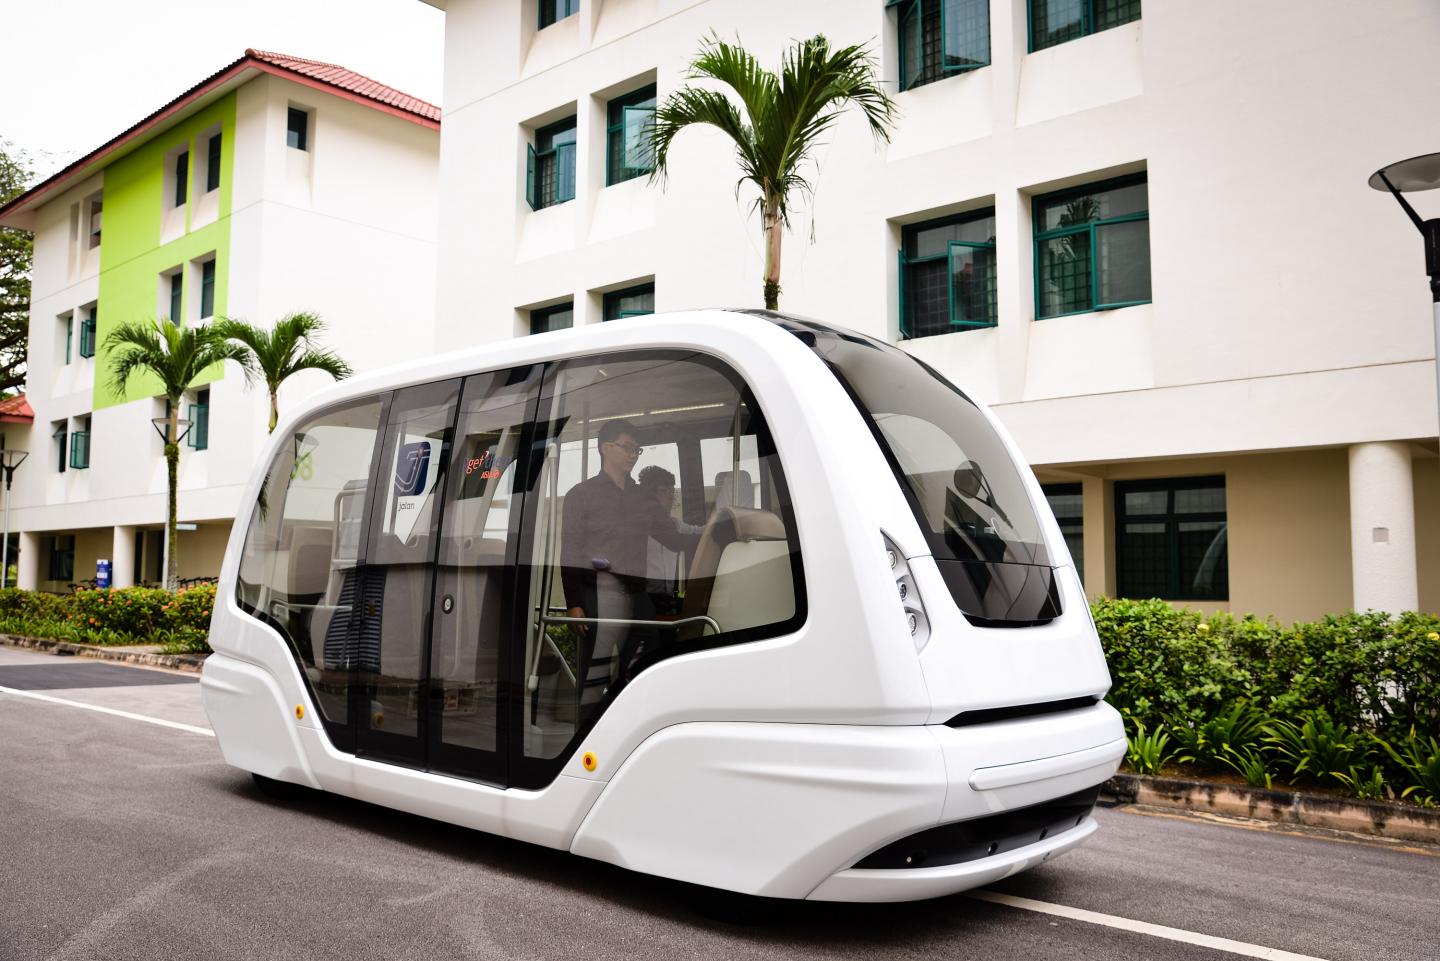 NTU Singapore to Trial New Autonomous Vehicles on Its Smart Campus